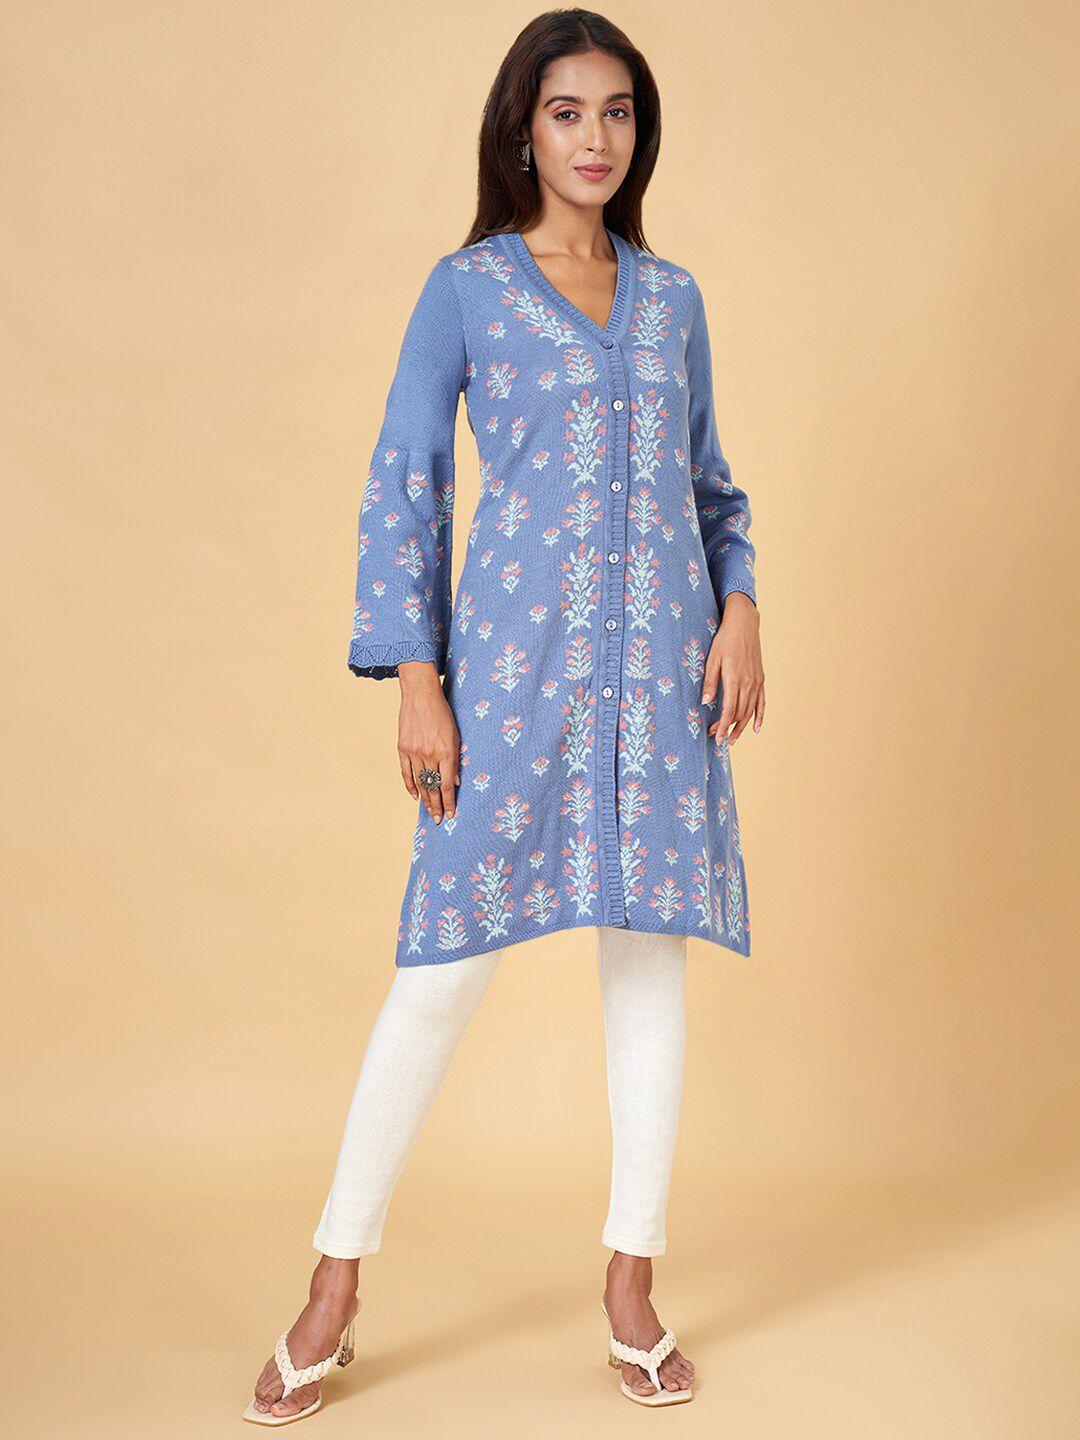 rangmanch by pantaloons floral printed v-neck flared sleeves a-line kurta